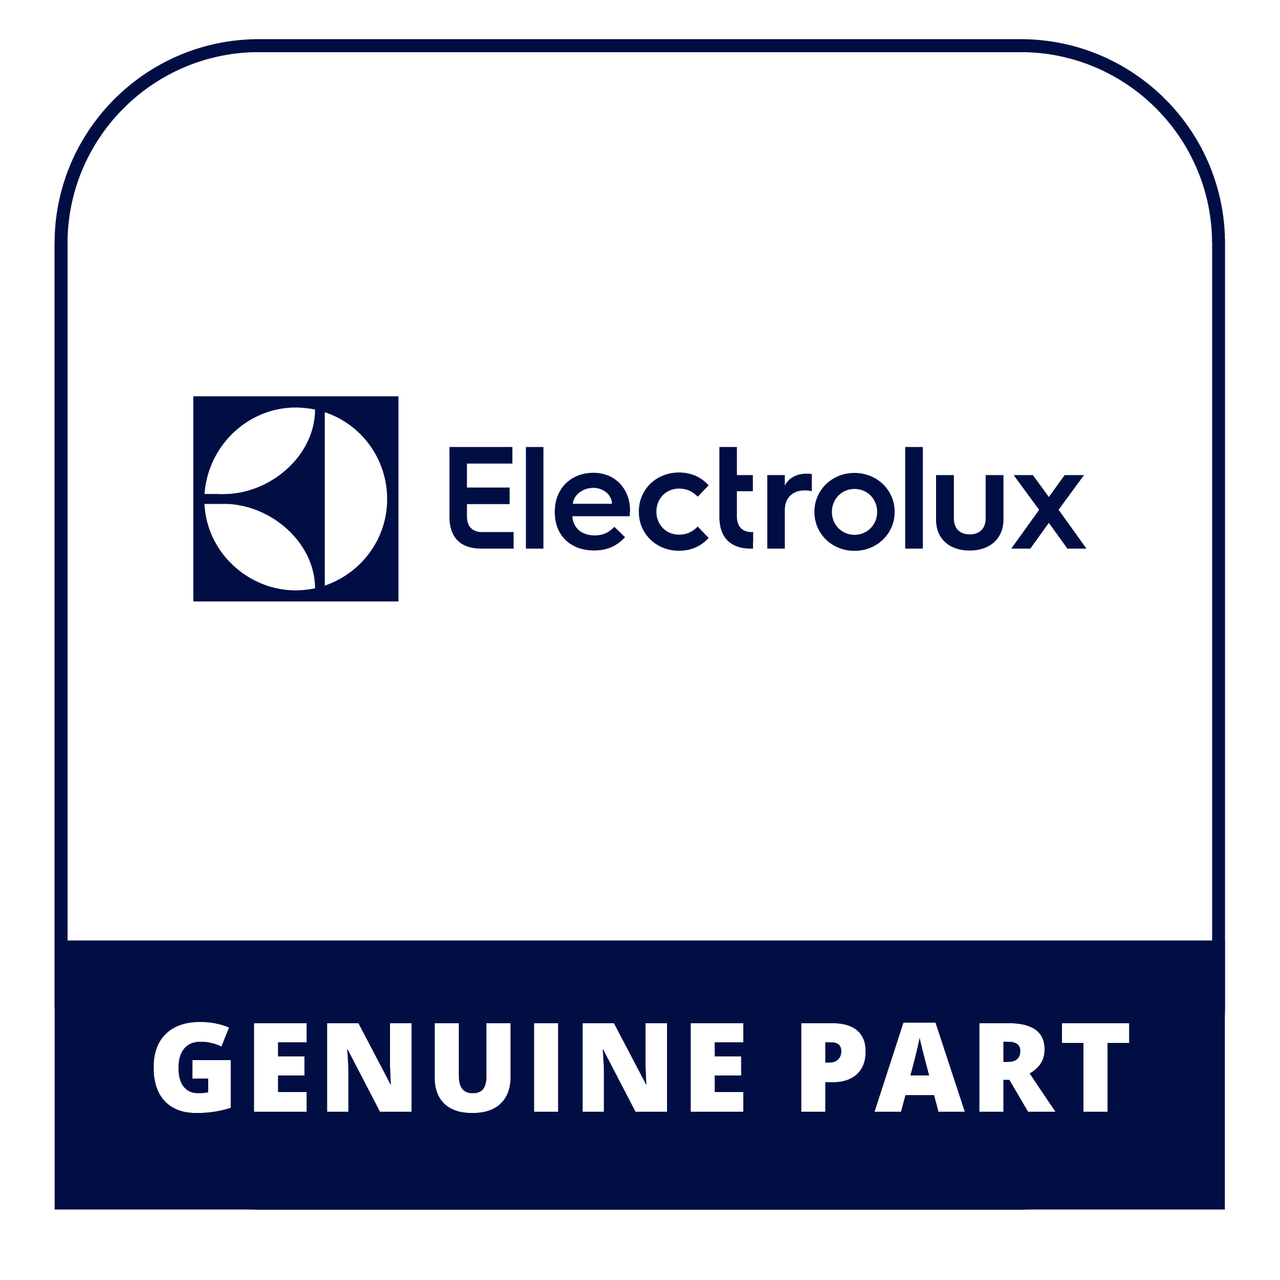 Frigidaire - Electrolux 5304476606 - SEAL - Genuine Electrolux Part